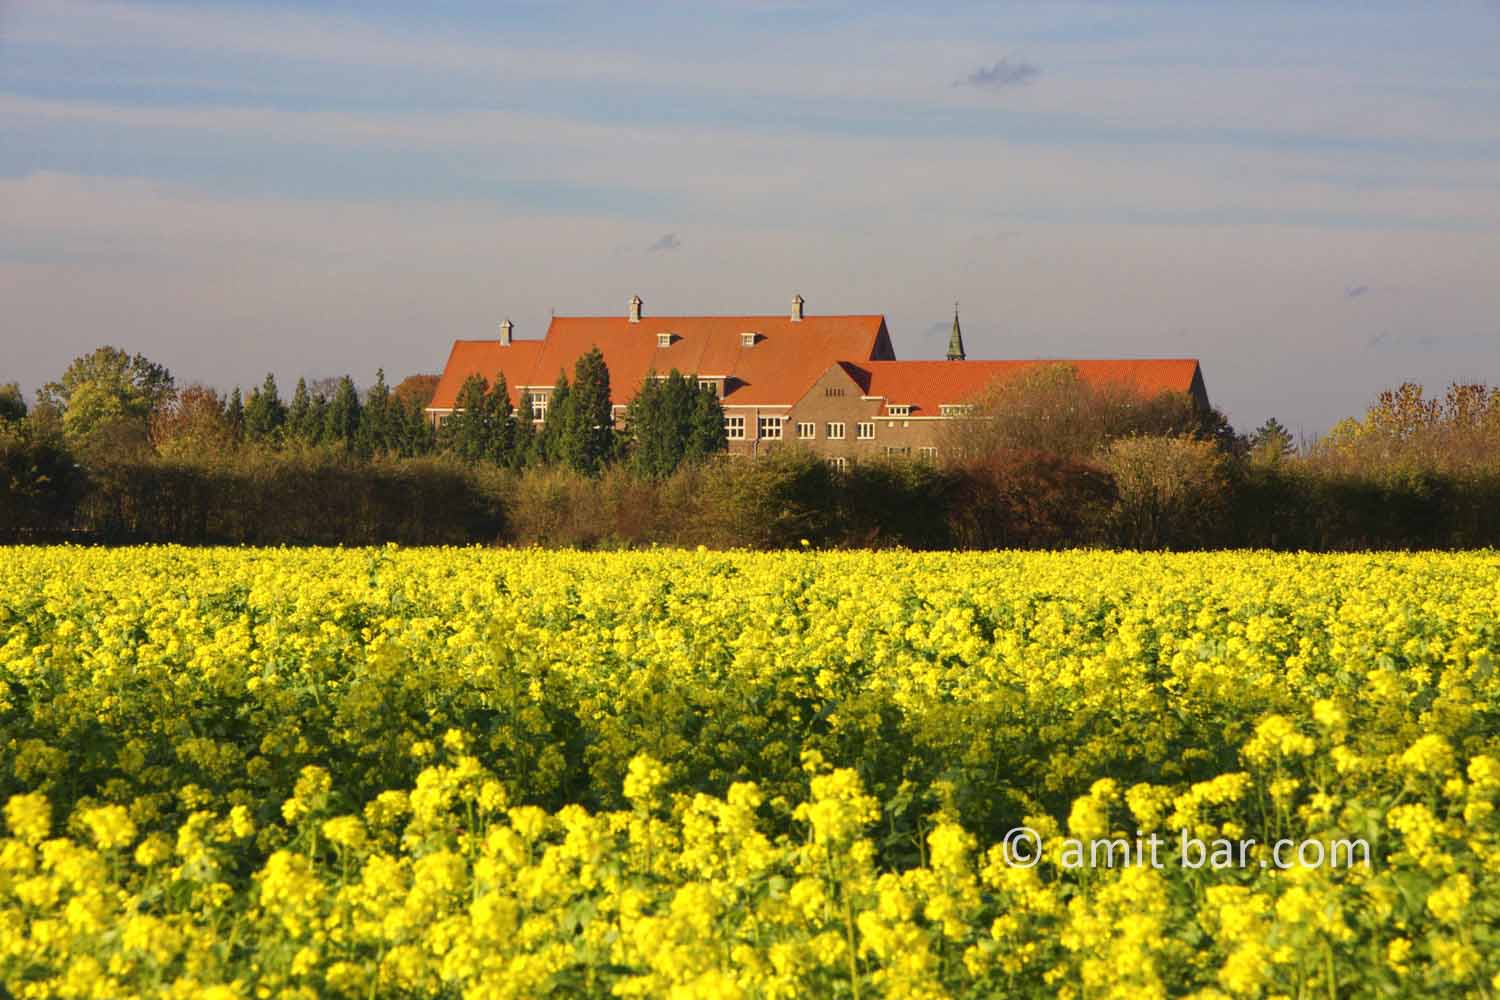 Castle Sevenaer: Castle Sevenaer with mustard field, The Netherlands